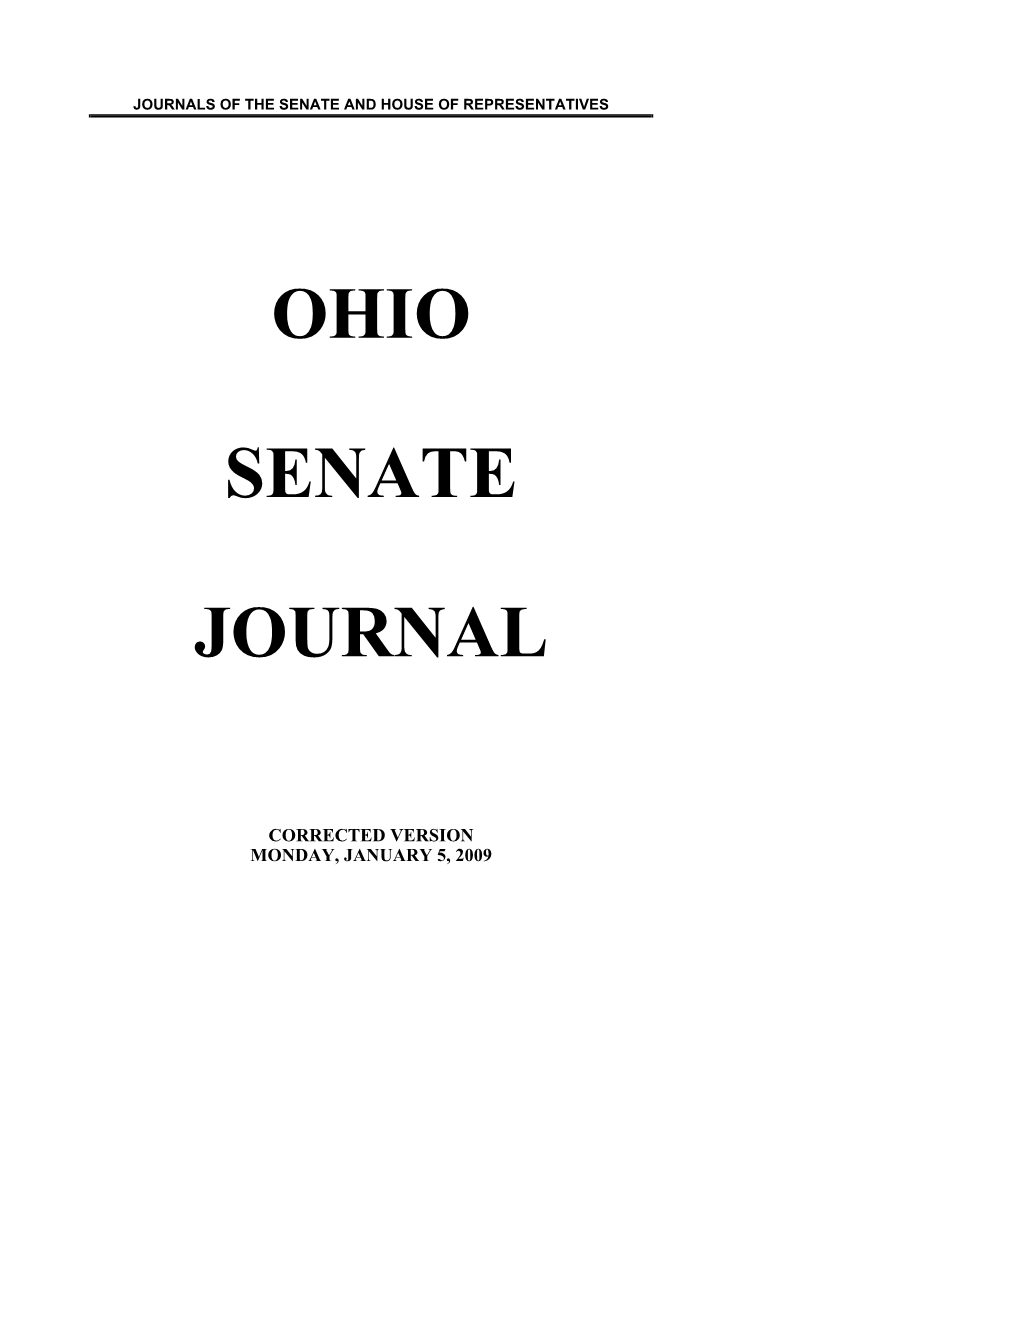 Ohio Senate Journal